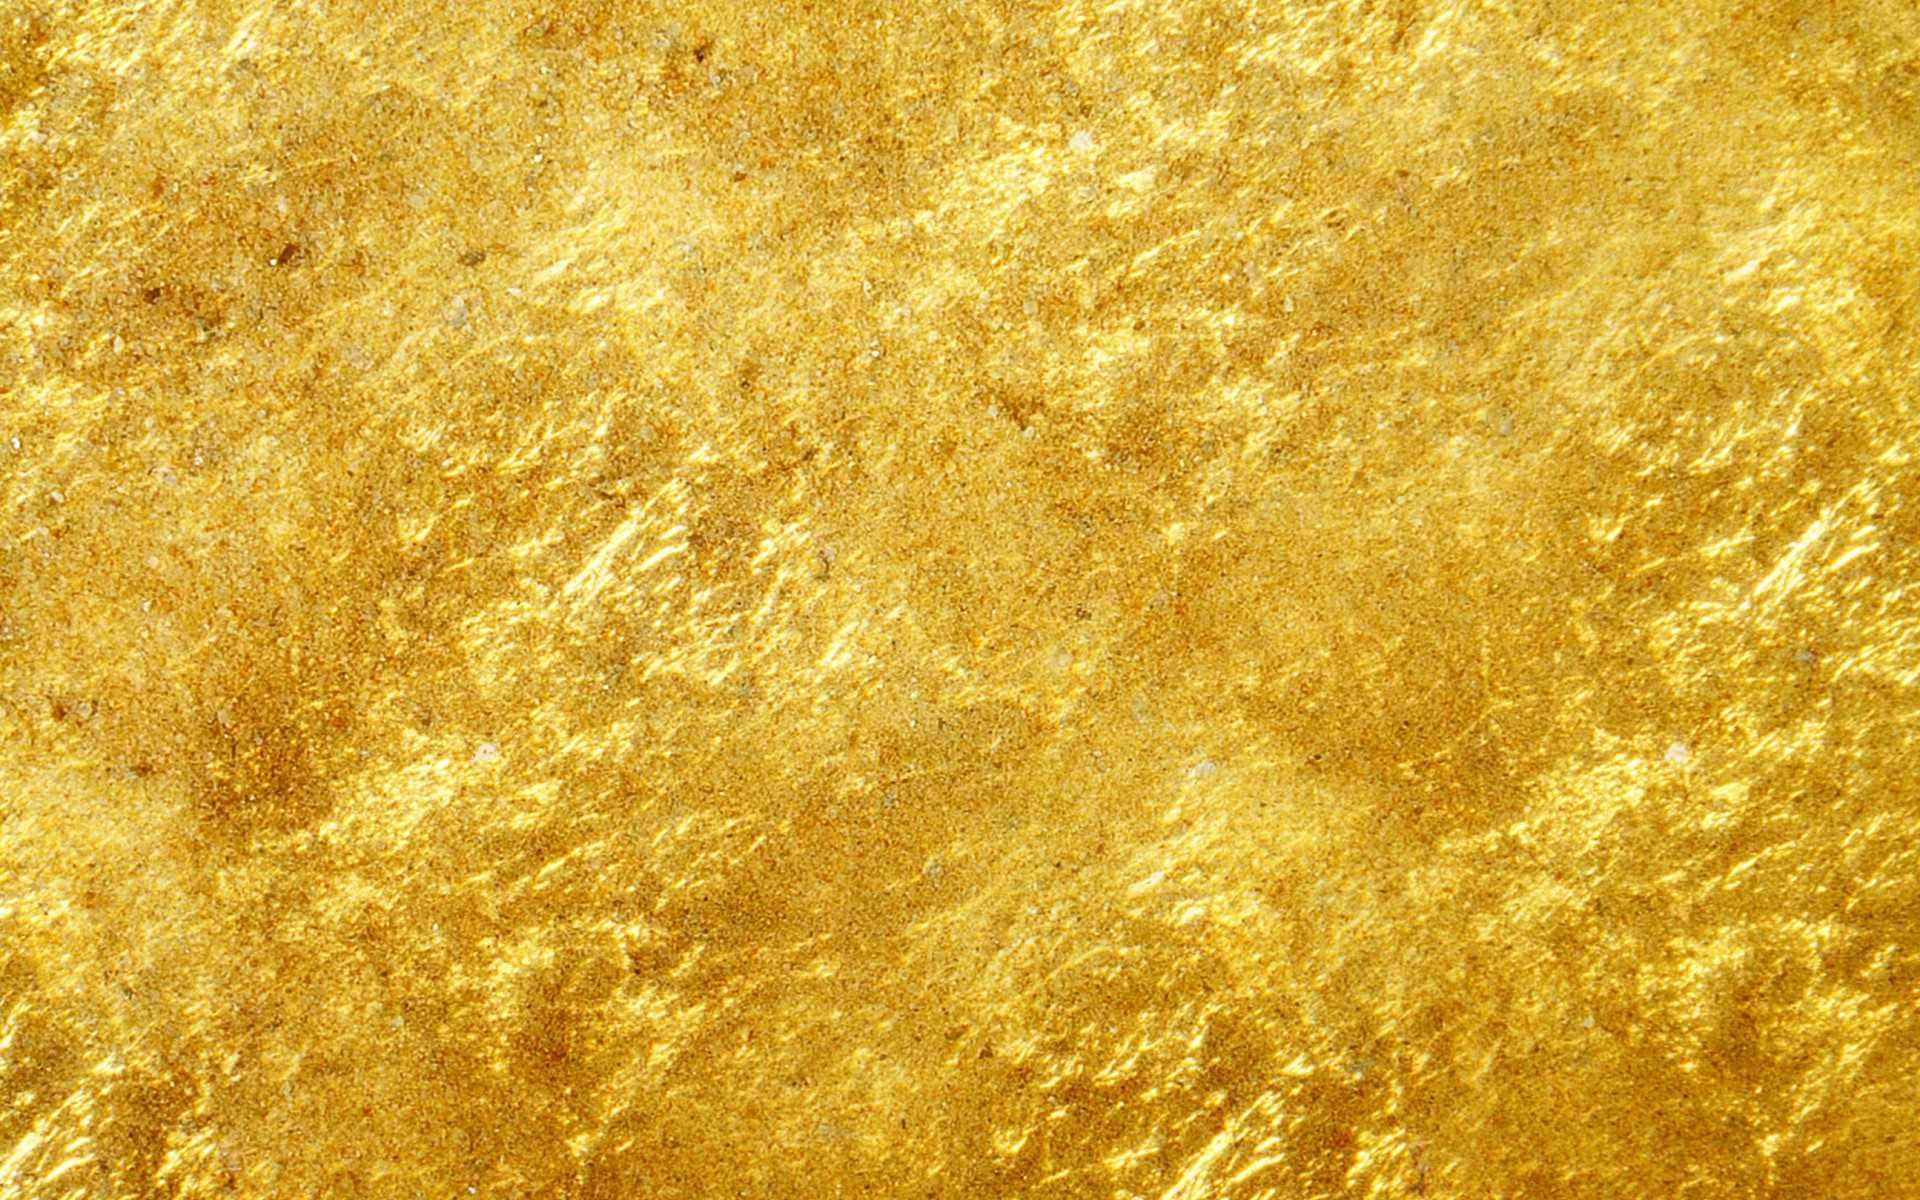 Shine Bright with Metallic Gold Wallpaper